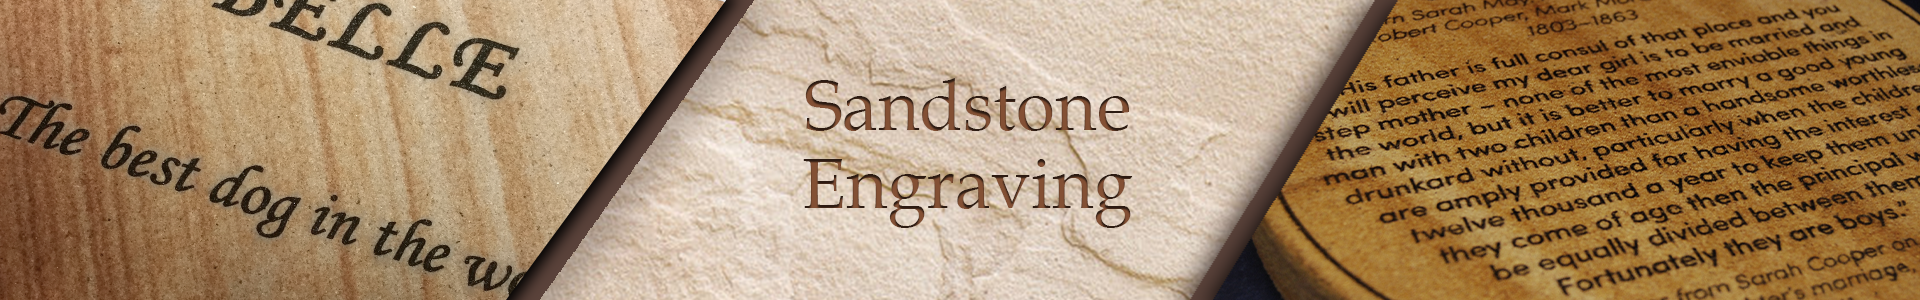 sandstone_bannert.png